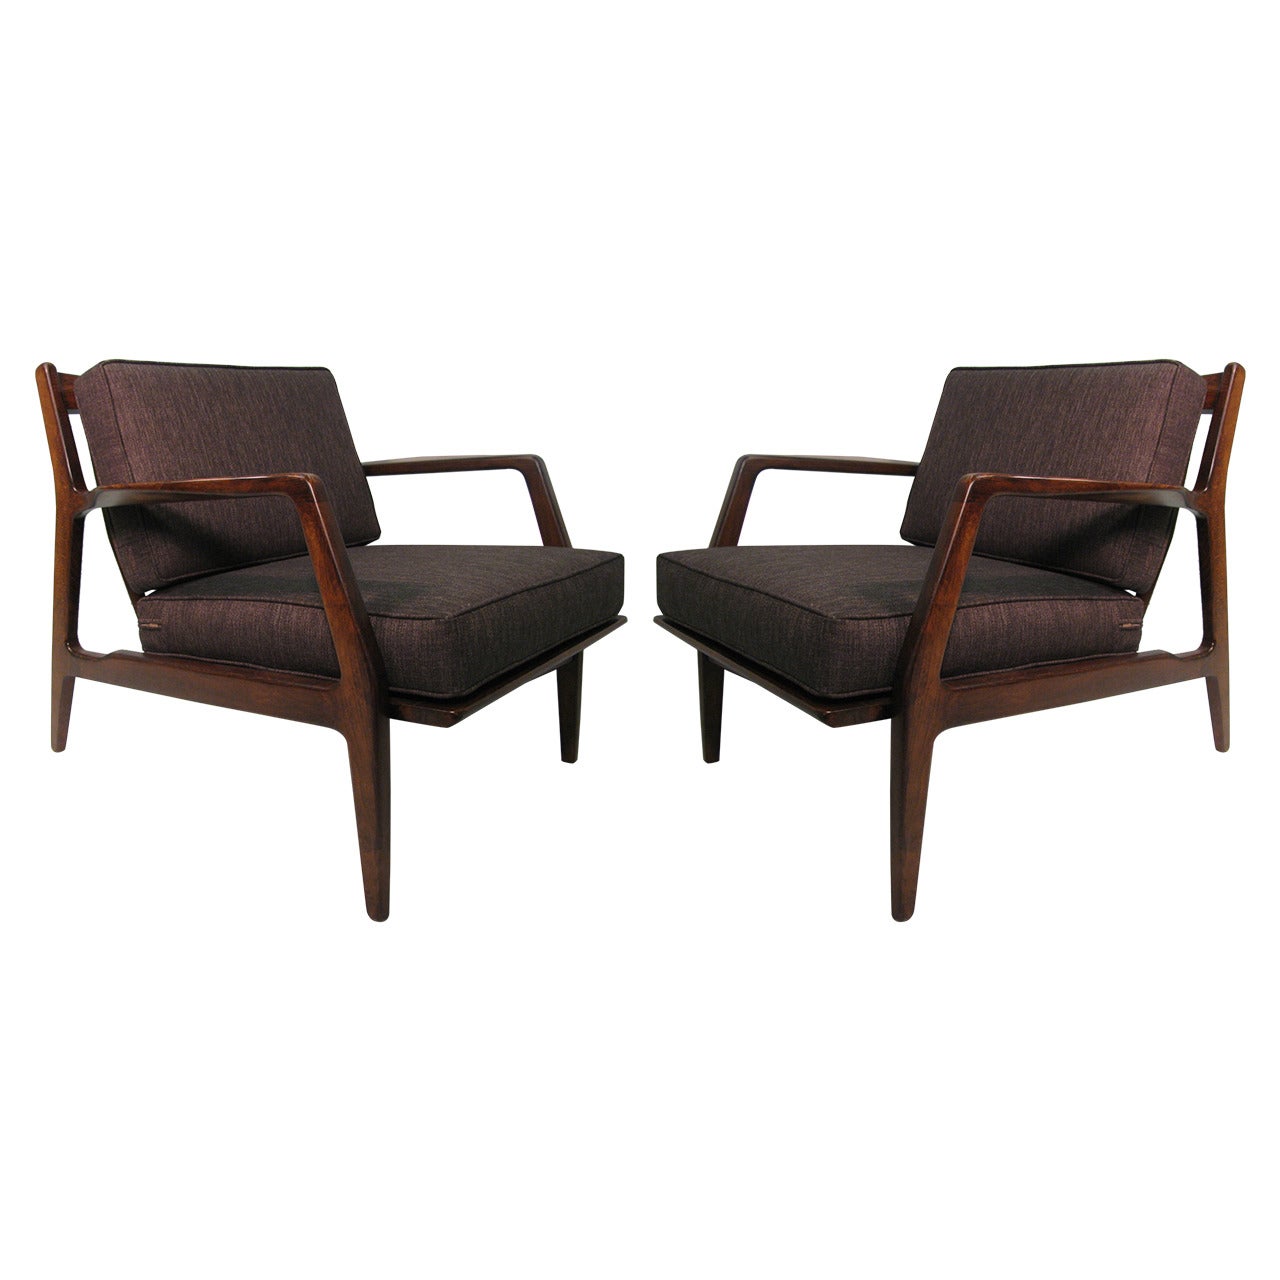 Pair of Danish Modern Lounge Chairs by Ib Kofod-Larsen